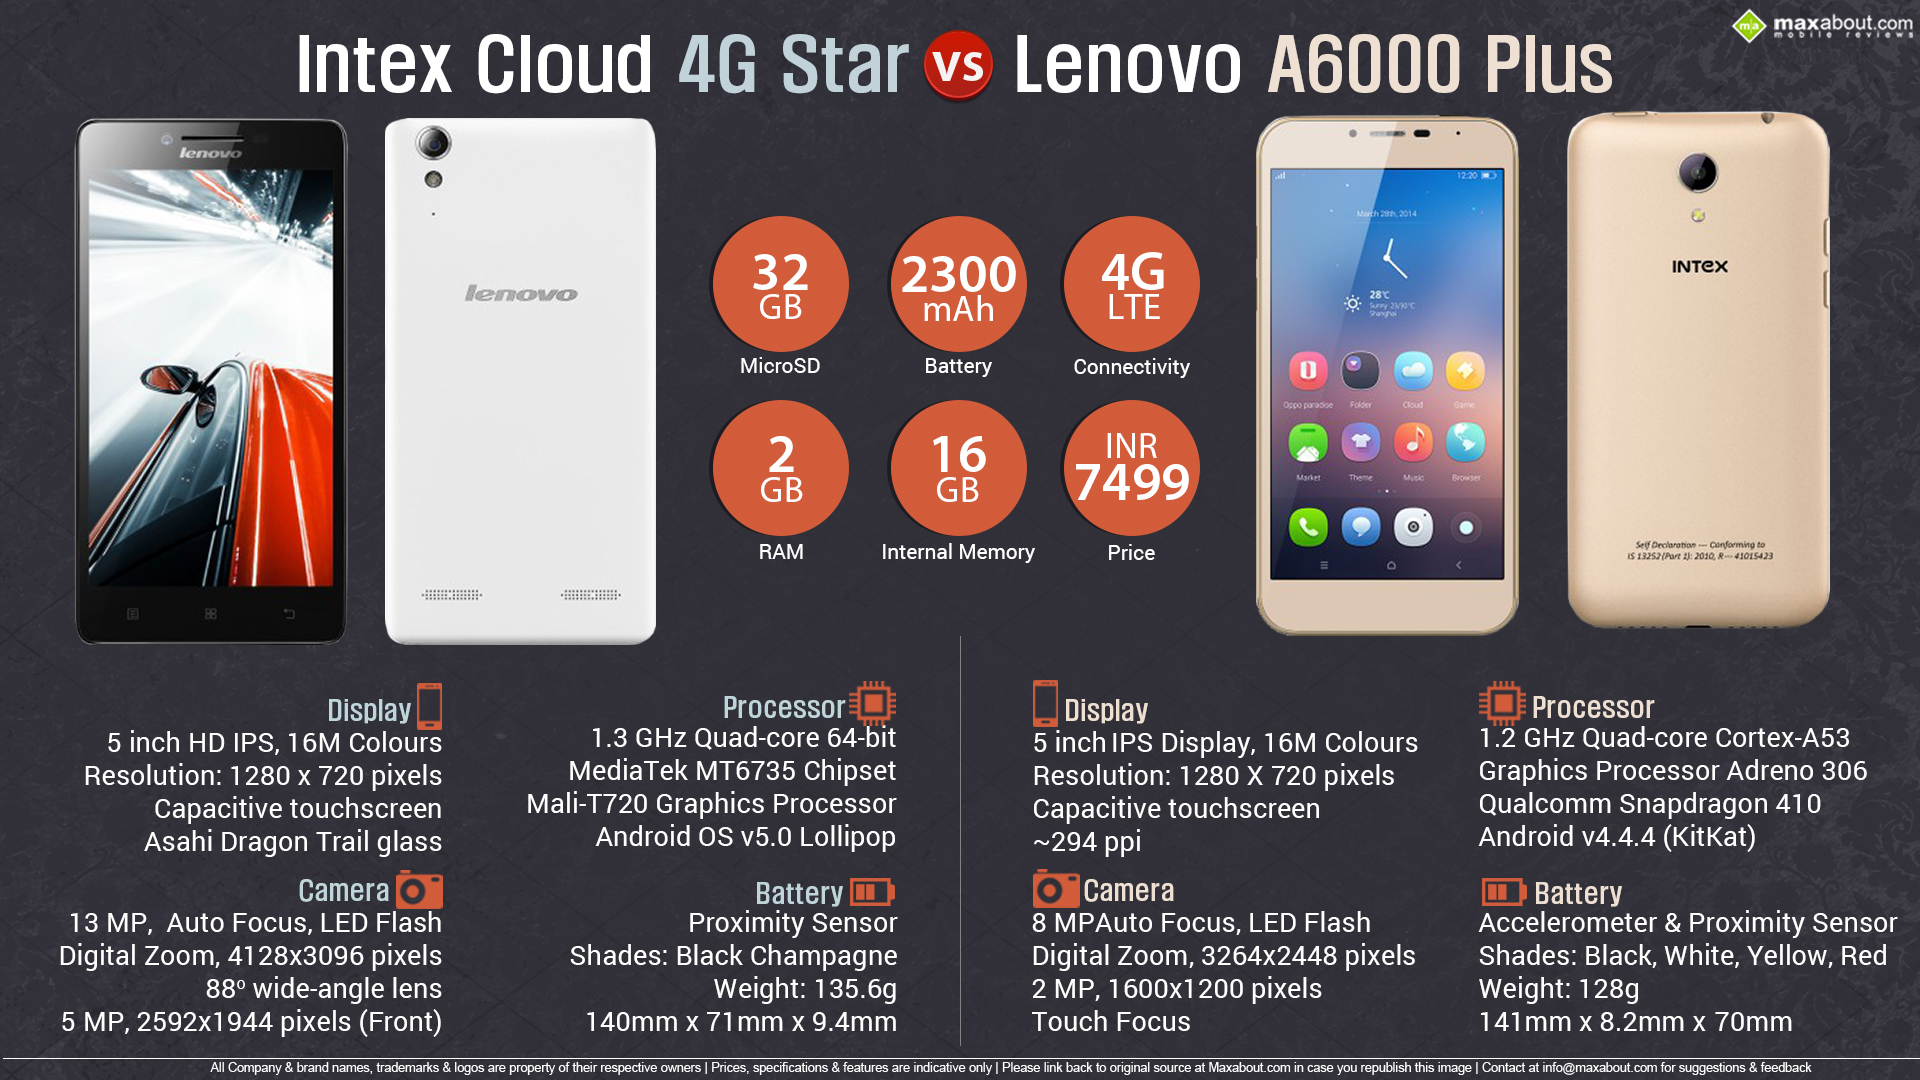 Intex Cloud 4G Star vs Lenovo A6000 Plus